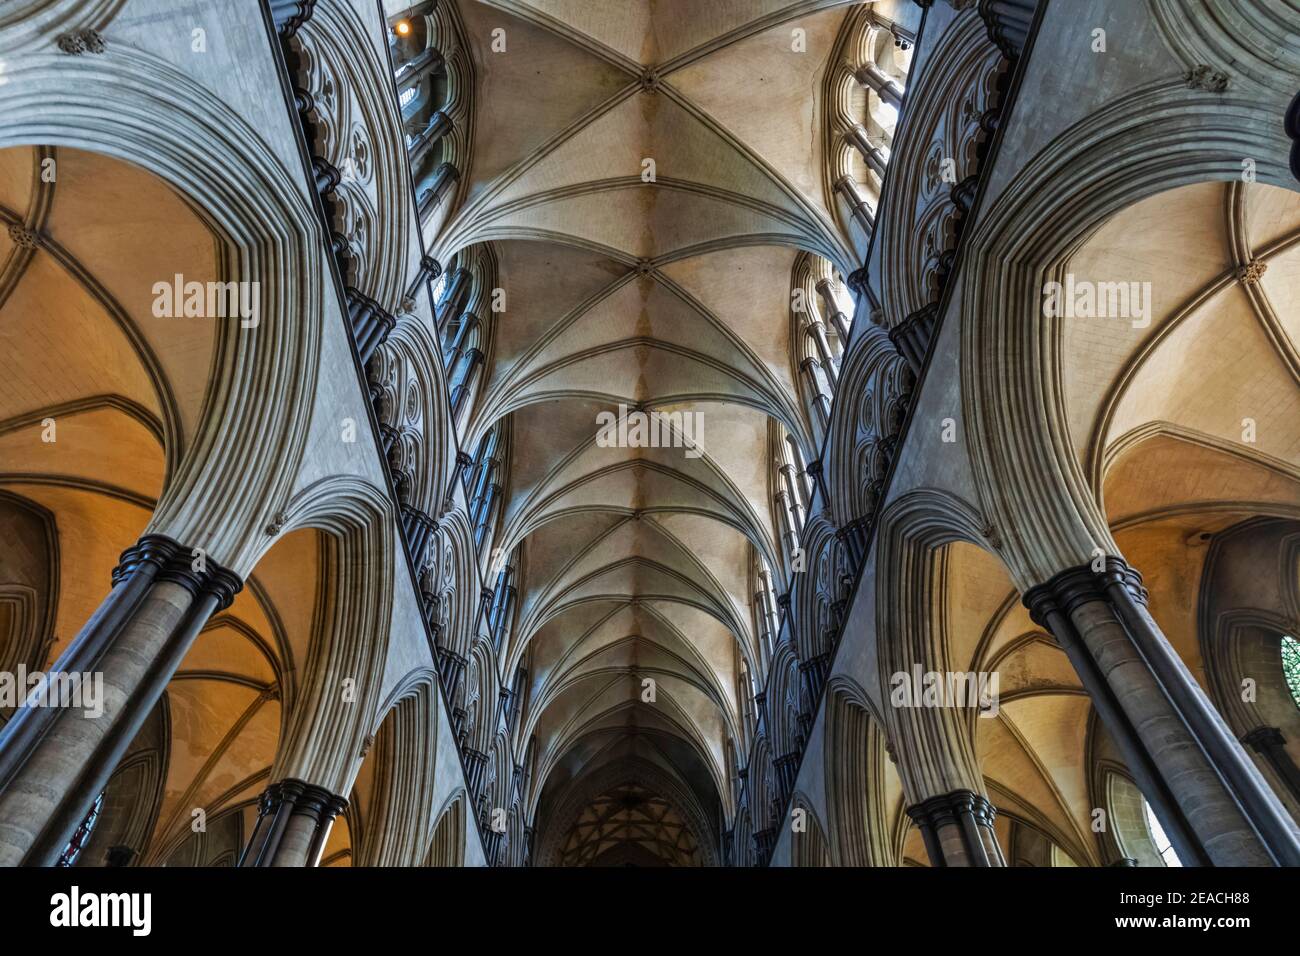 Angleterre, Wiltshire, Salisbury, Cathédrale de Salisbury, vue intérieure Banque D'Images